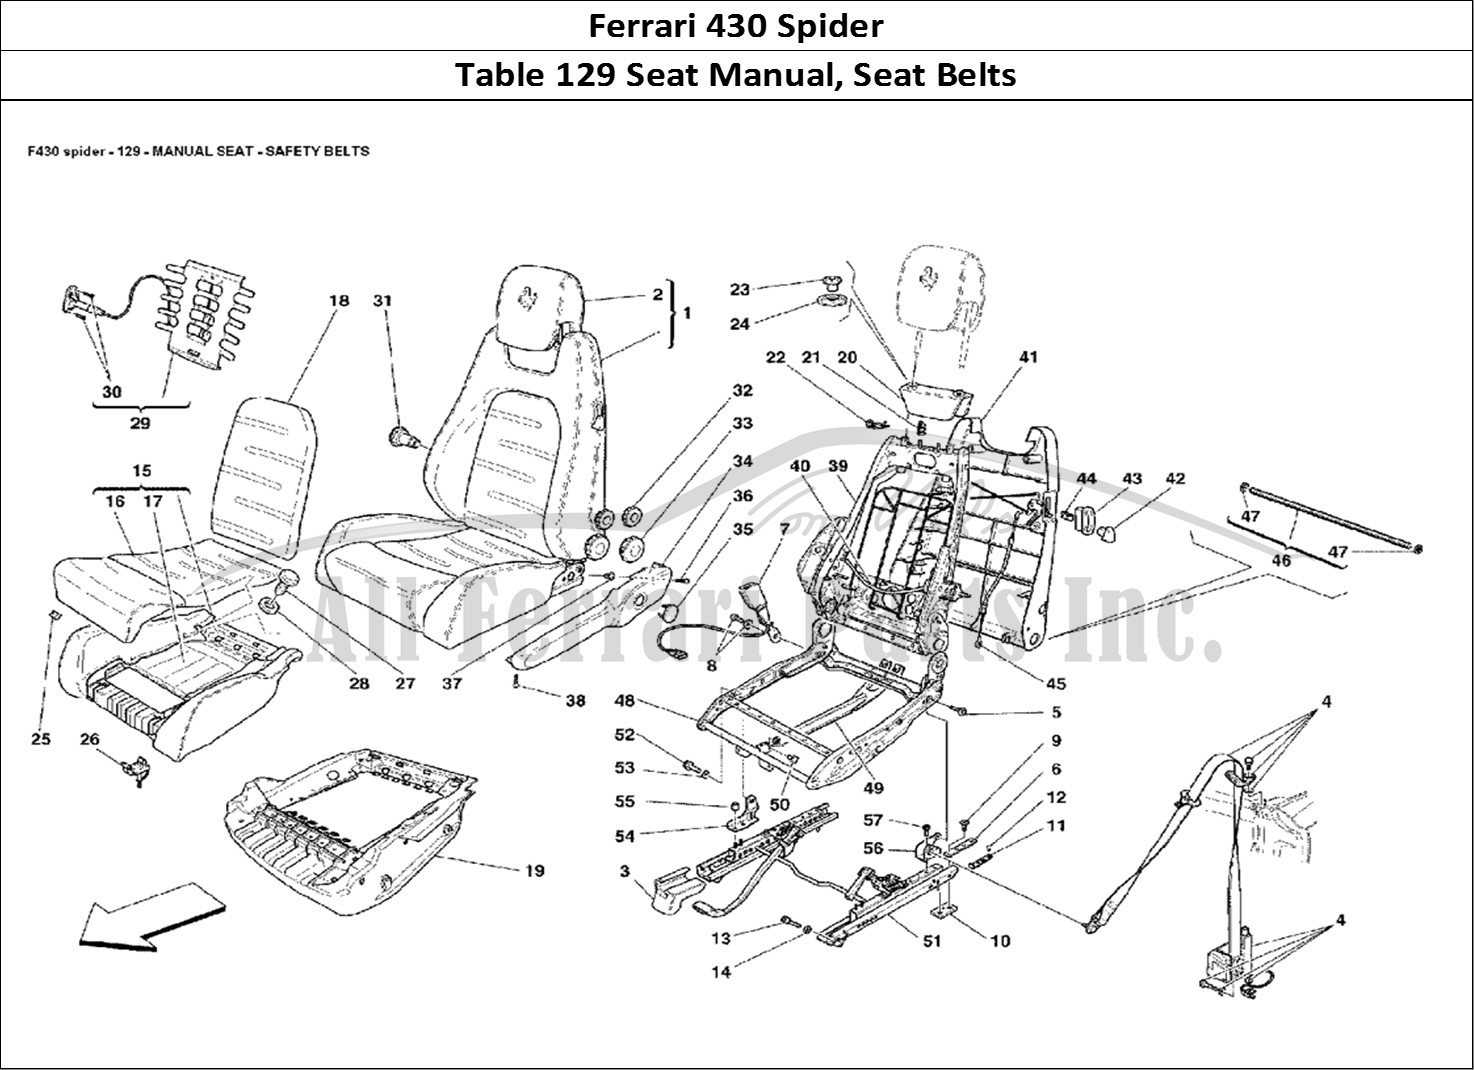 Ferrari Parts Ferrari 430 Spider Page 129 Manual Seat - Safety Belt